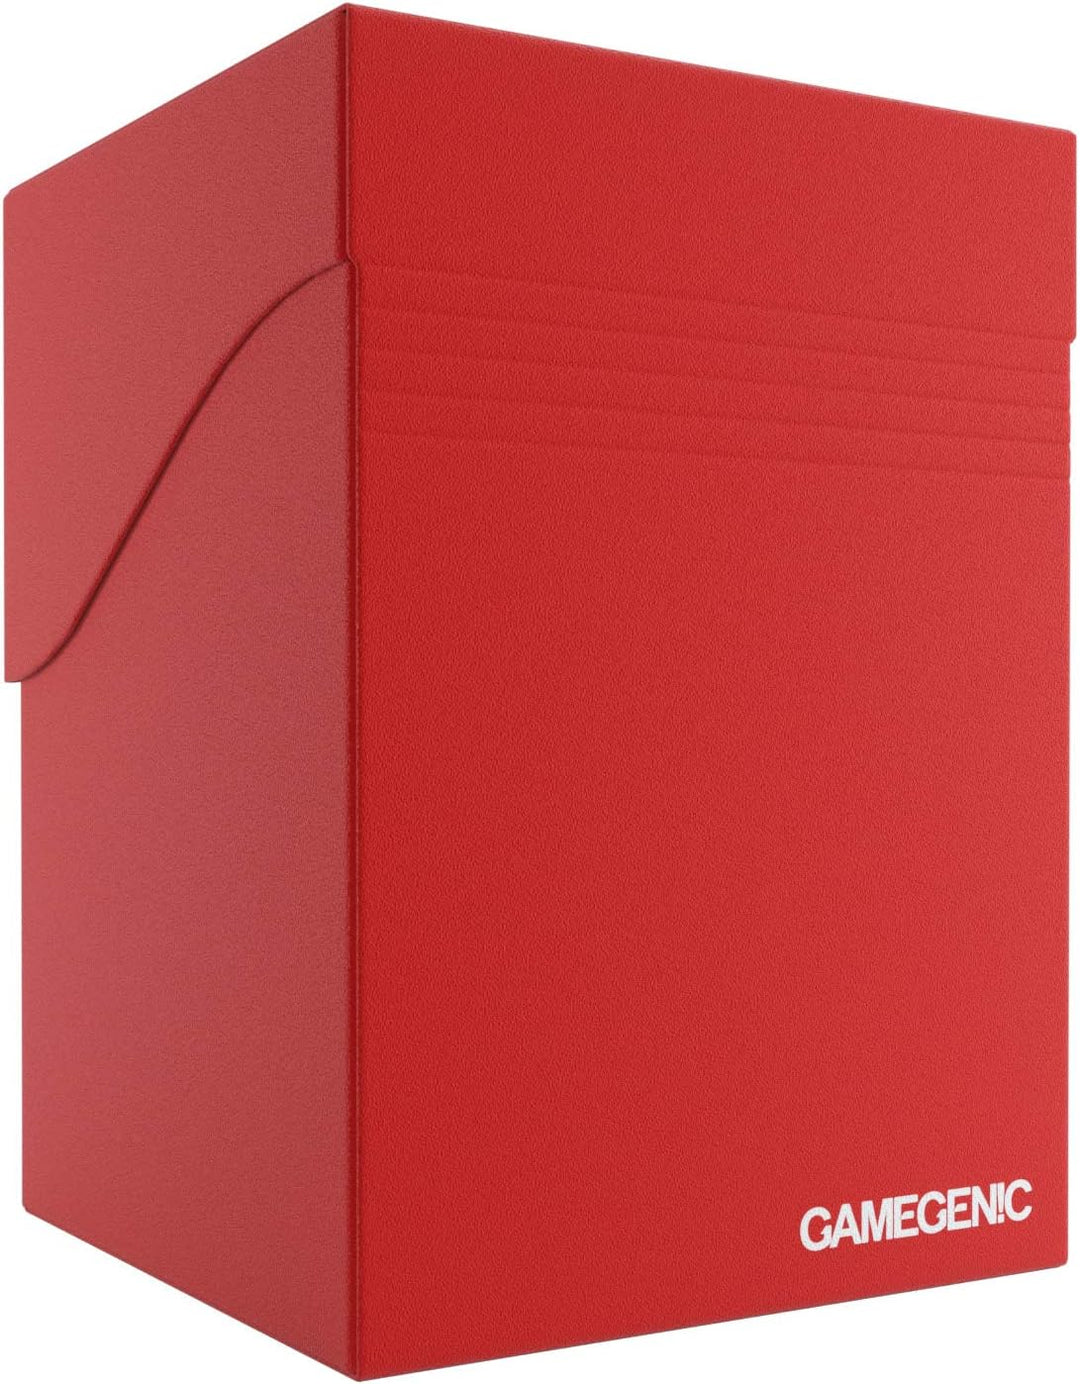 Gamegenic 100-Card Deck Holder, Red